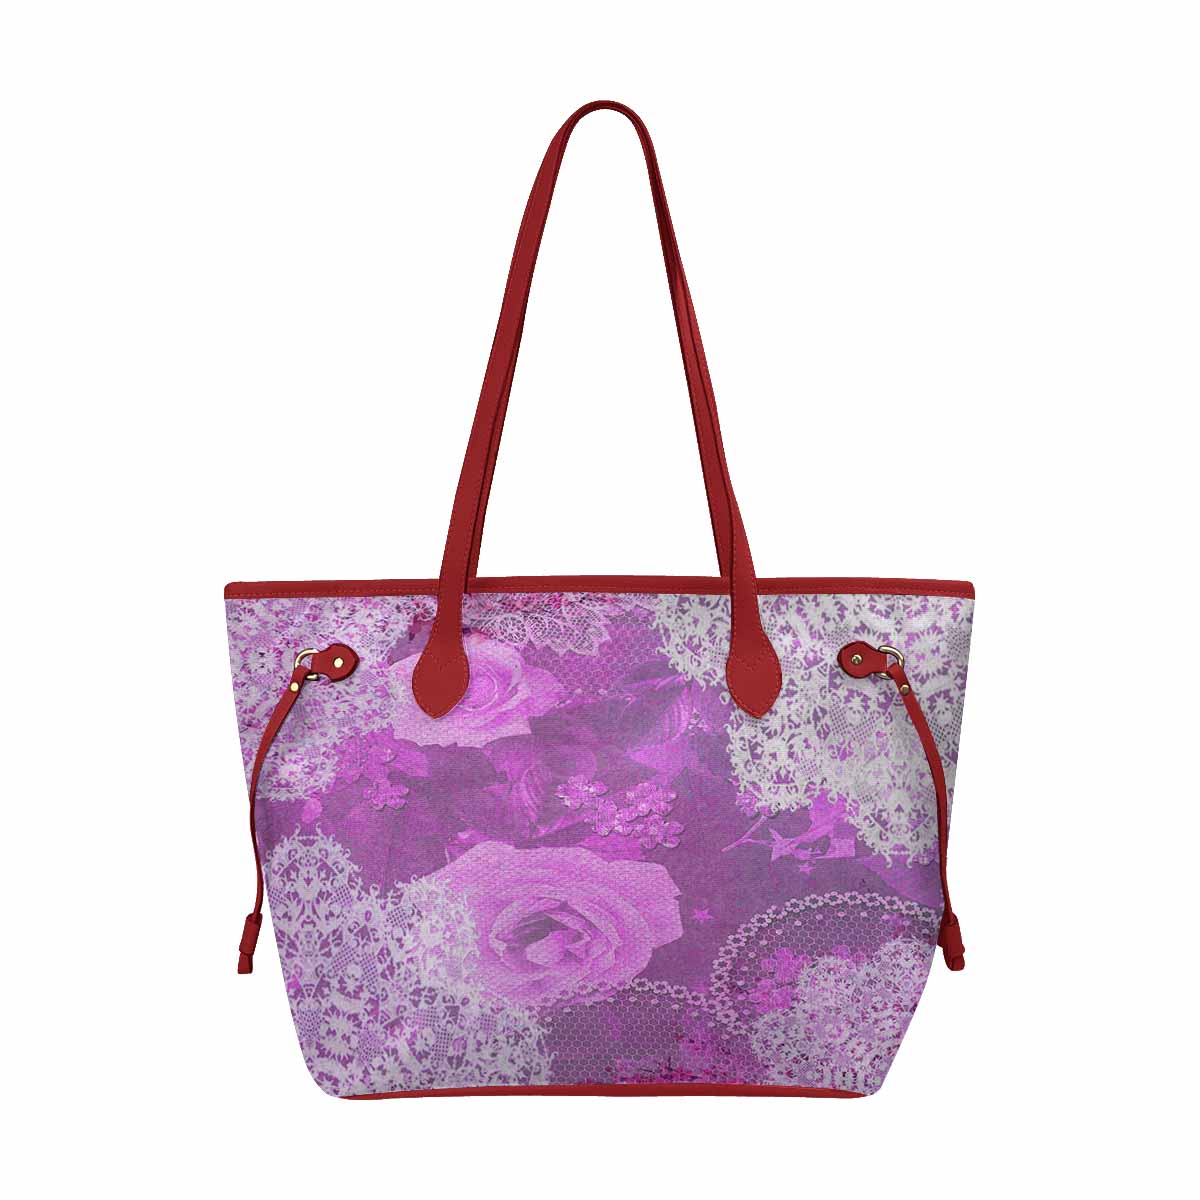 Victorian printed lace handbag, MODEL 1695361 Design 03